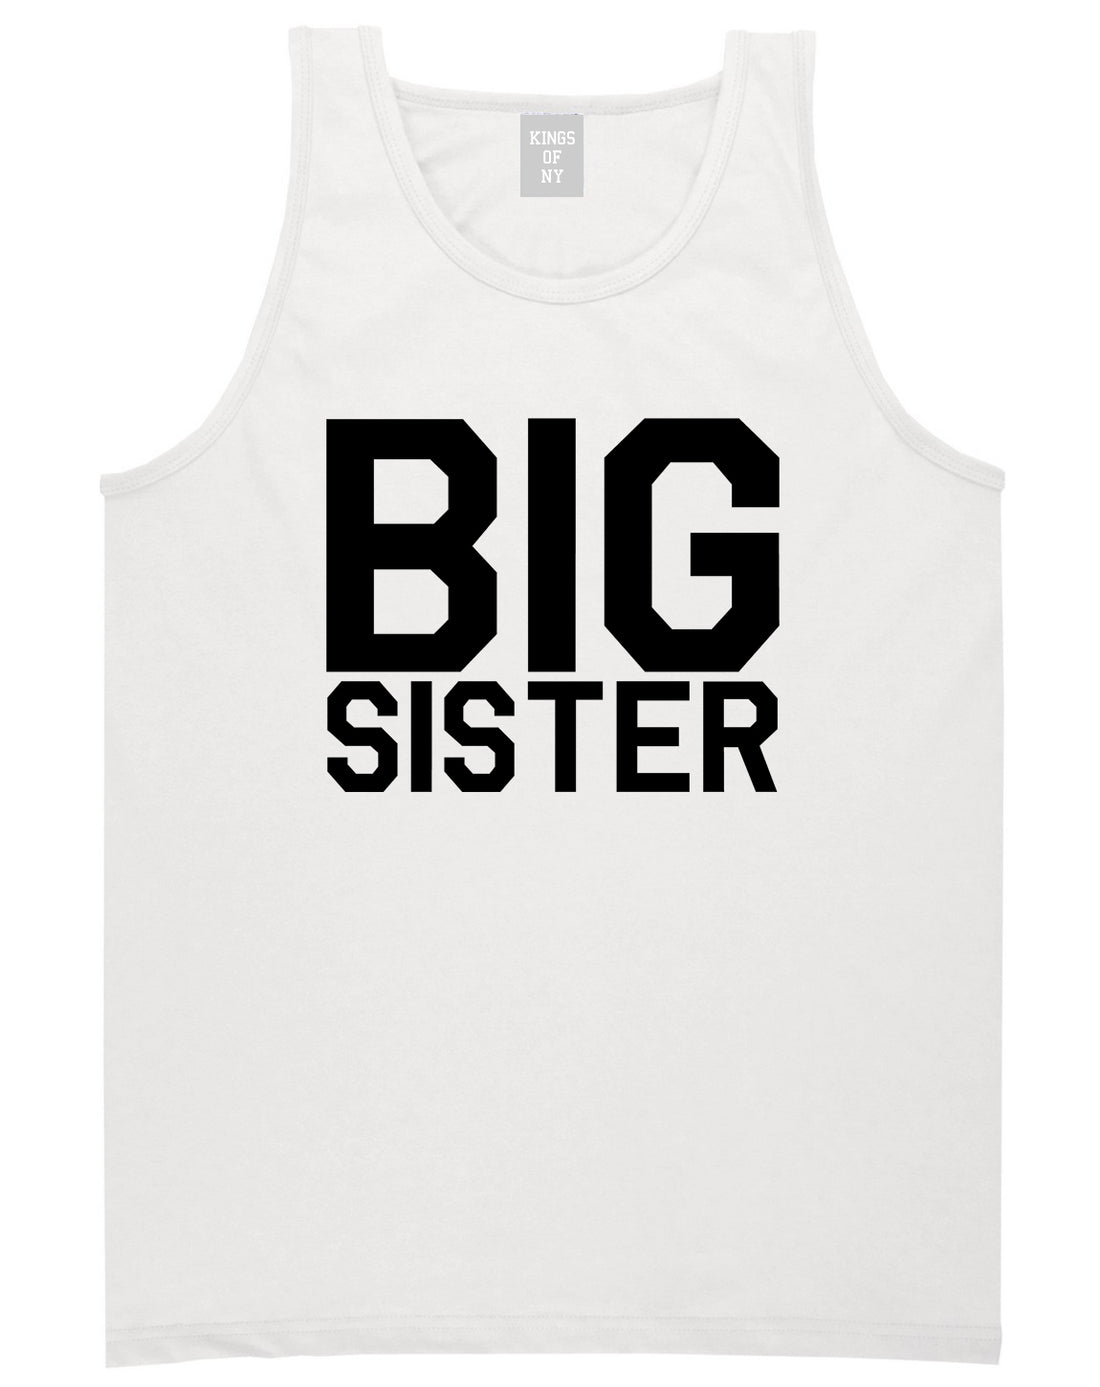 Big Sister White Tank Top Shirt by Kings Of NY